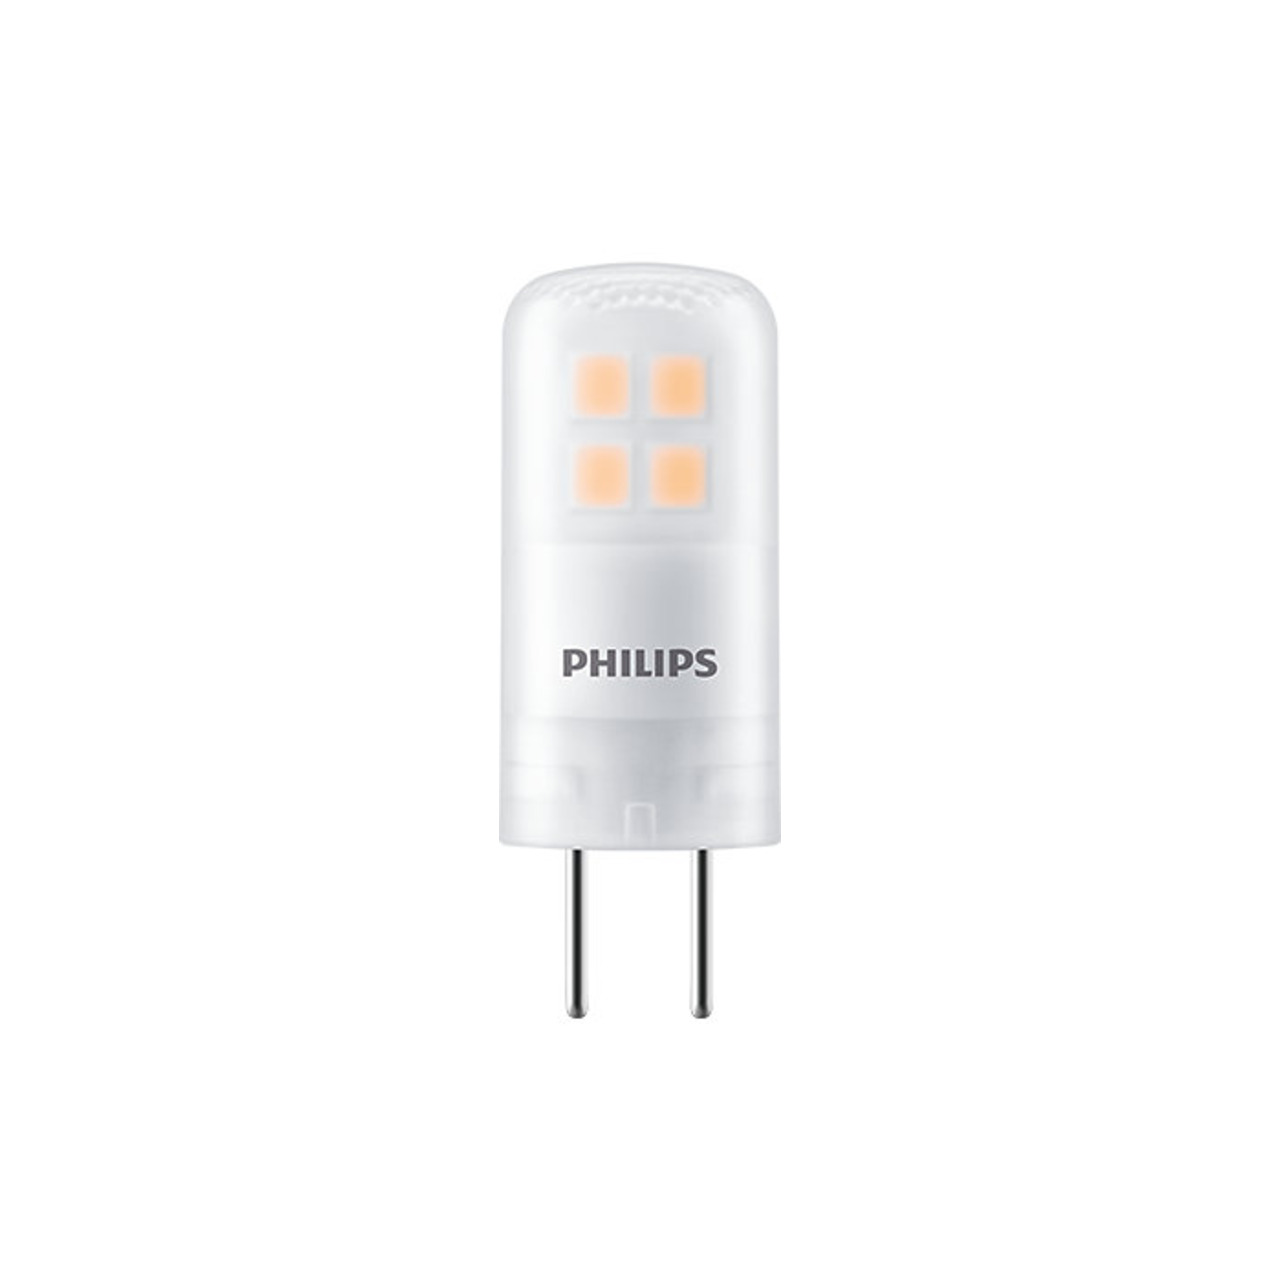 Philips 2-1-W-G4-LED-Lampe CorePro LEDcapsule- 210 lm- dimmbar- warmweiss